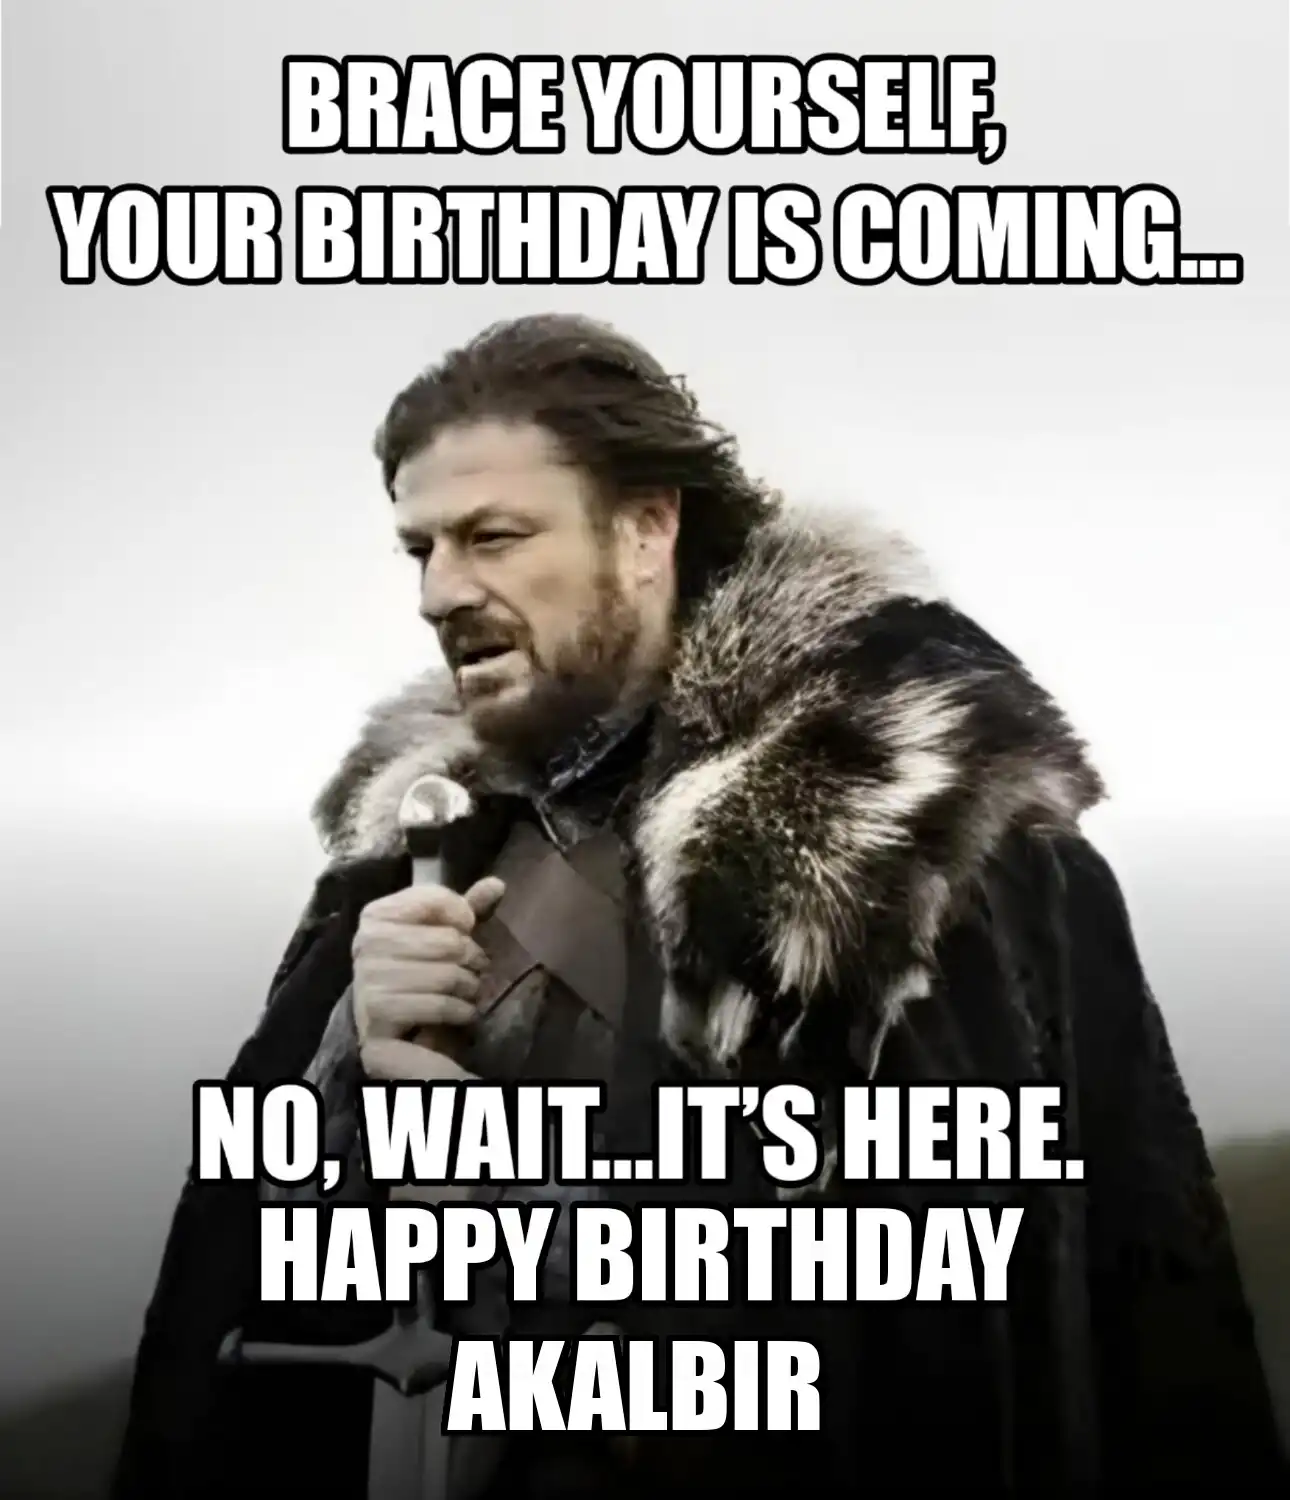 Happy Birthday Akalbir Brace Yourself Your Birthday Is Coming Meme